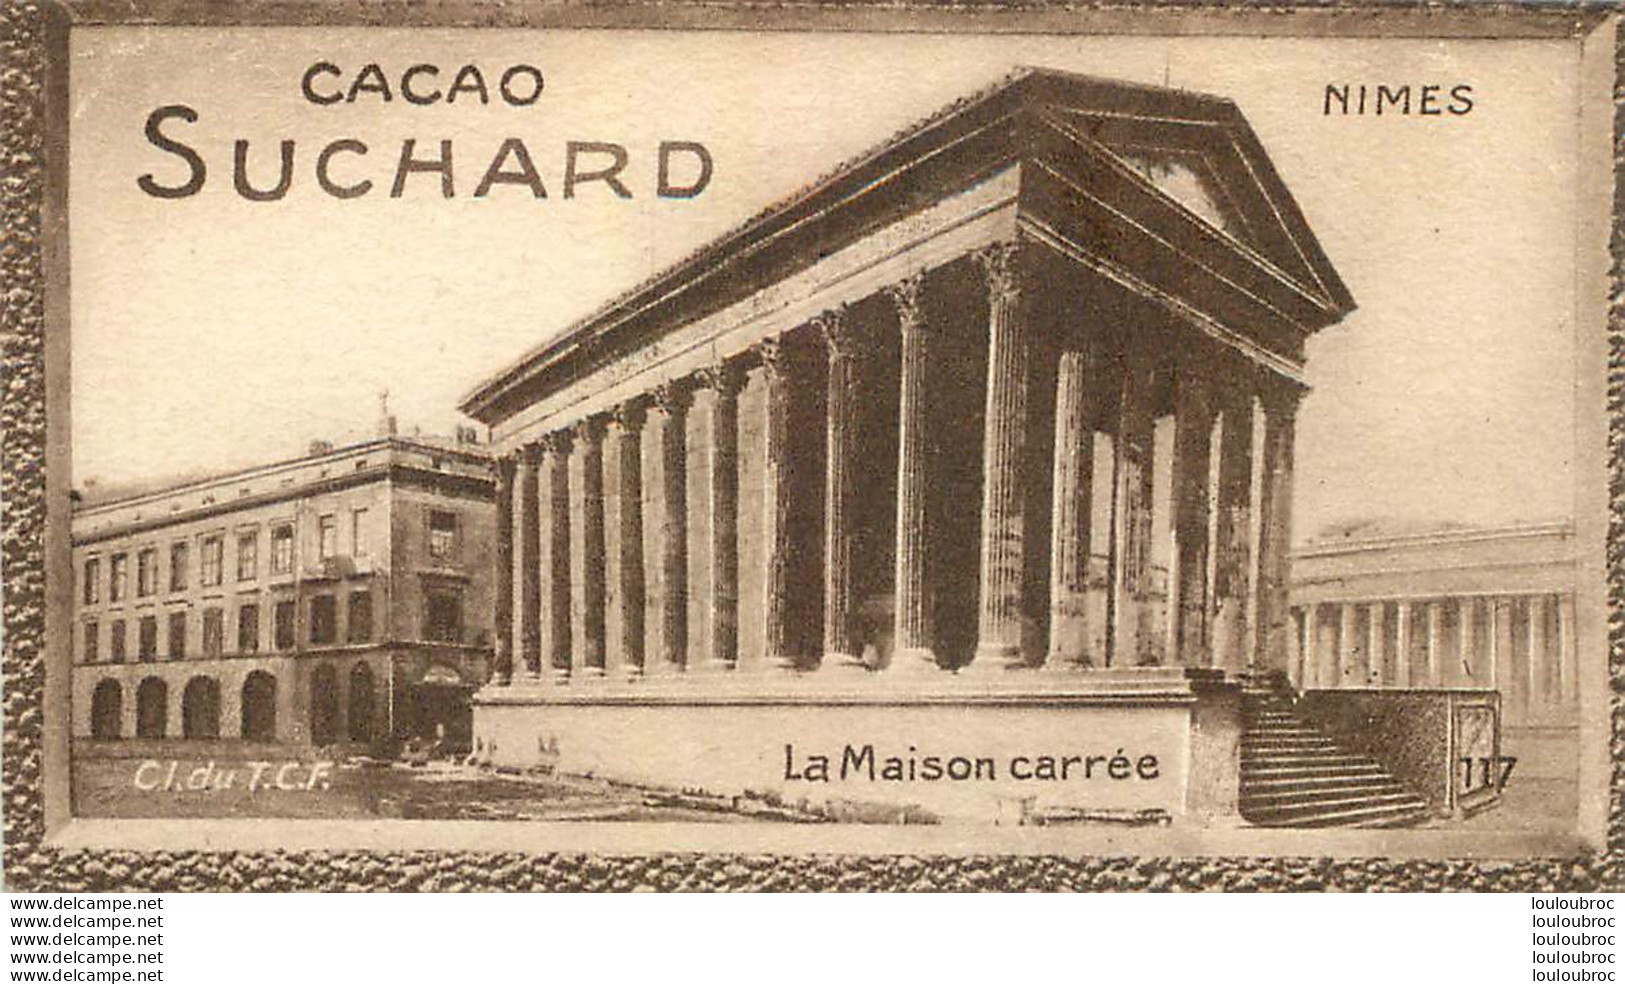 CHROMO CACAO SUCHARD NIMES  CL DU T.C.F. - Suchard